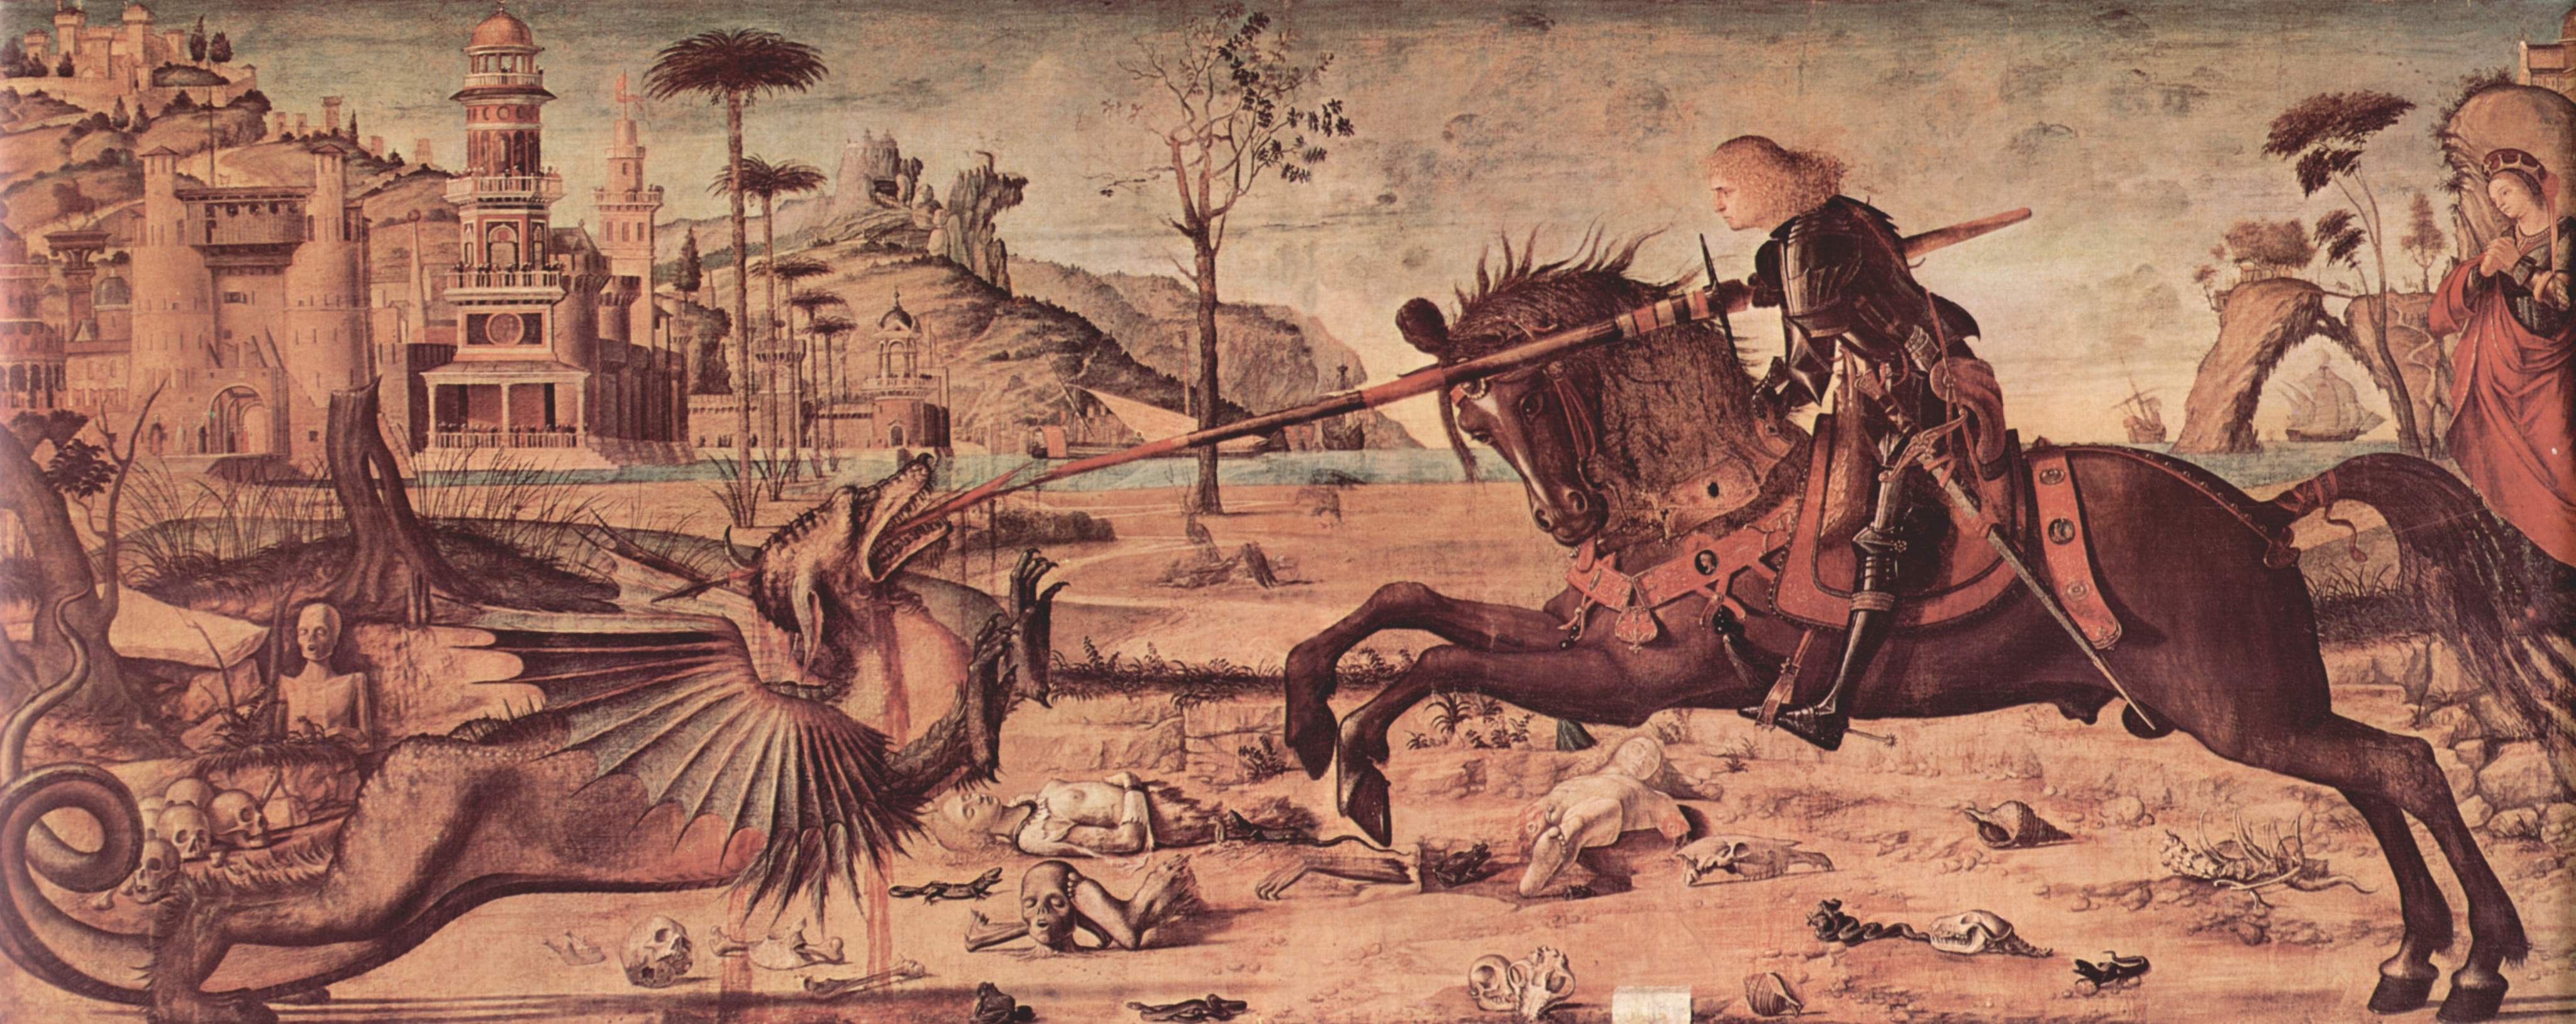 Sint-Joris en de Draak by Vittore Carpaccio - 1502 - 141 x 360 cm 